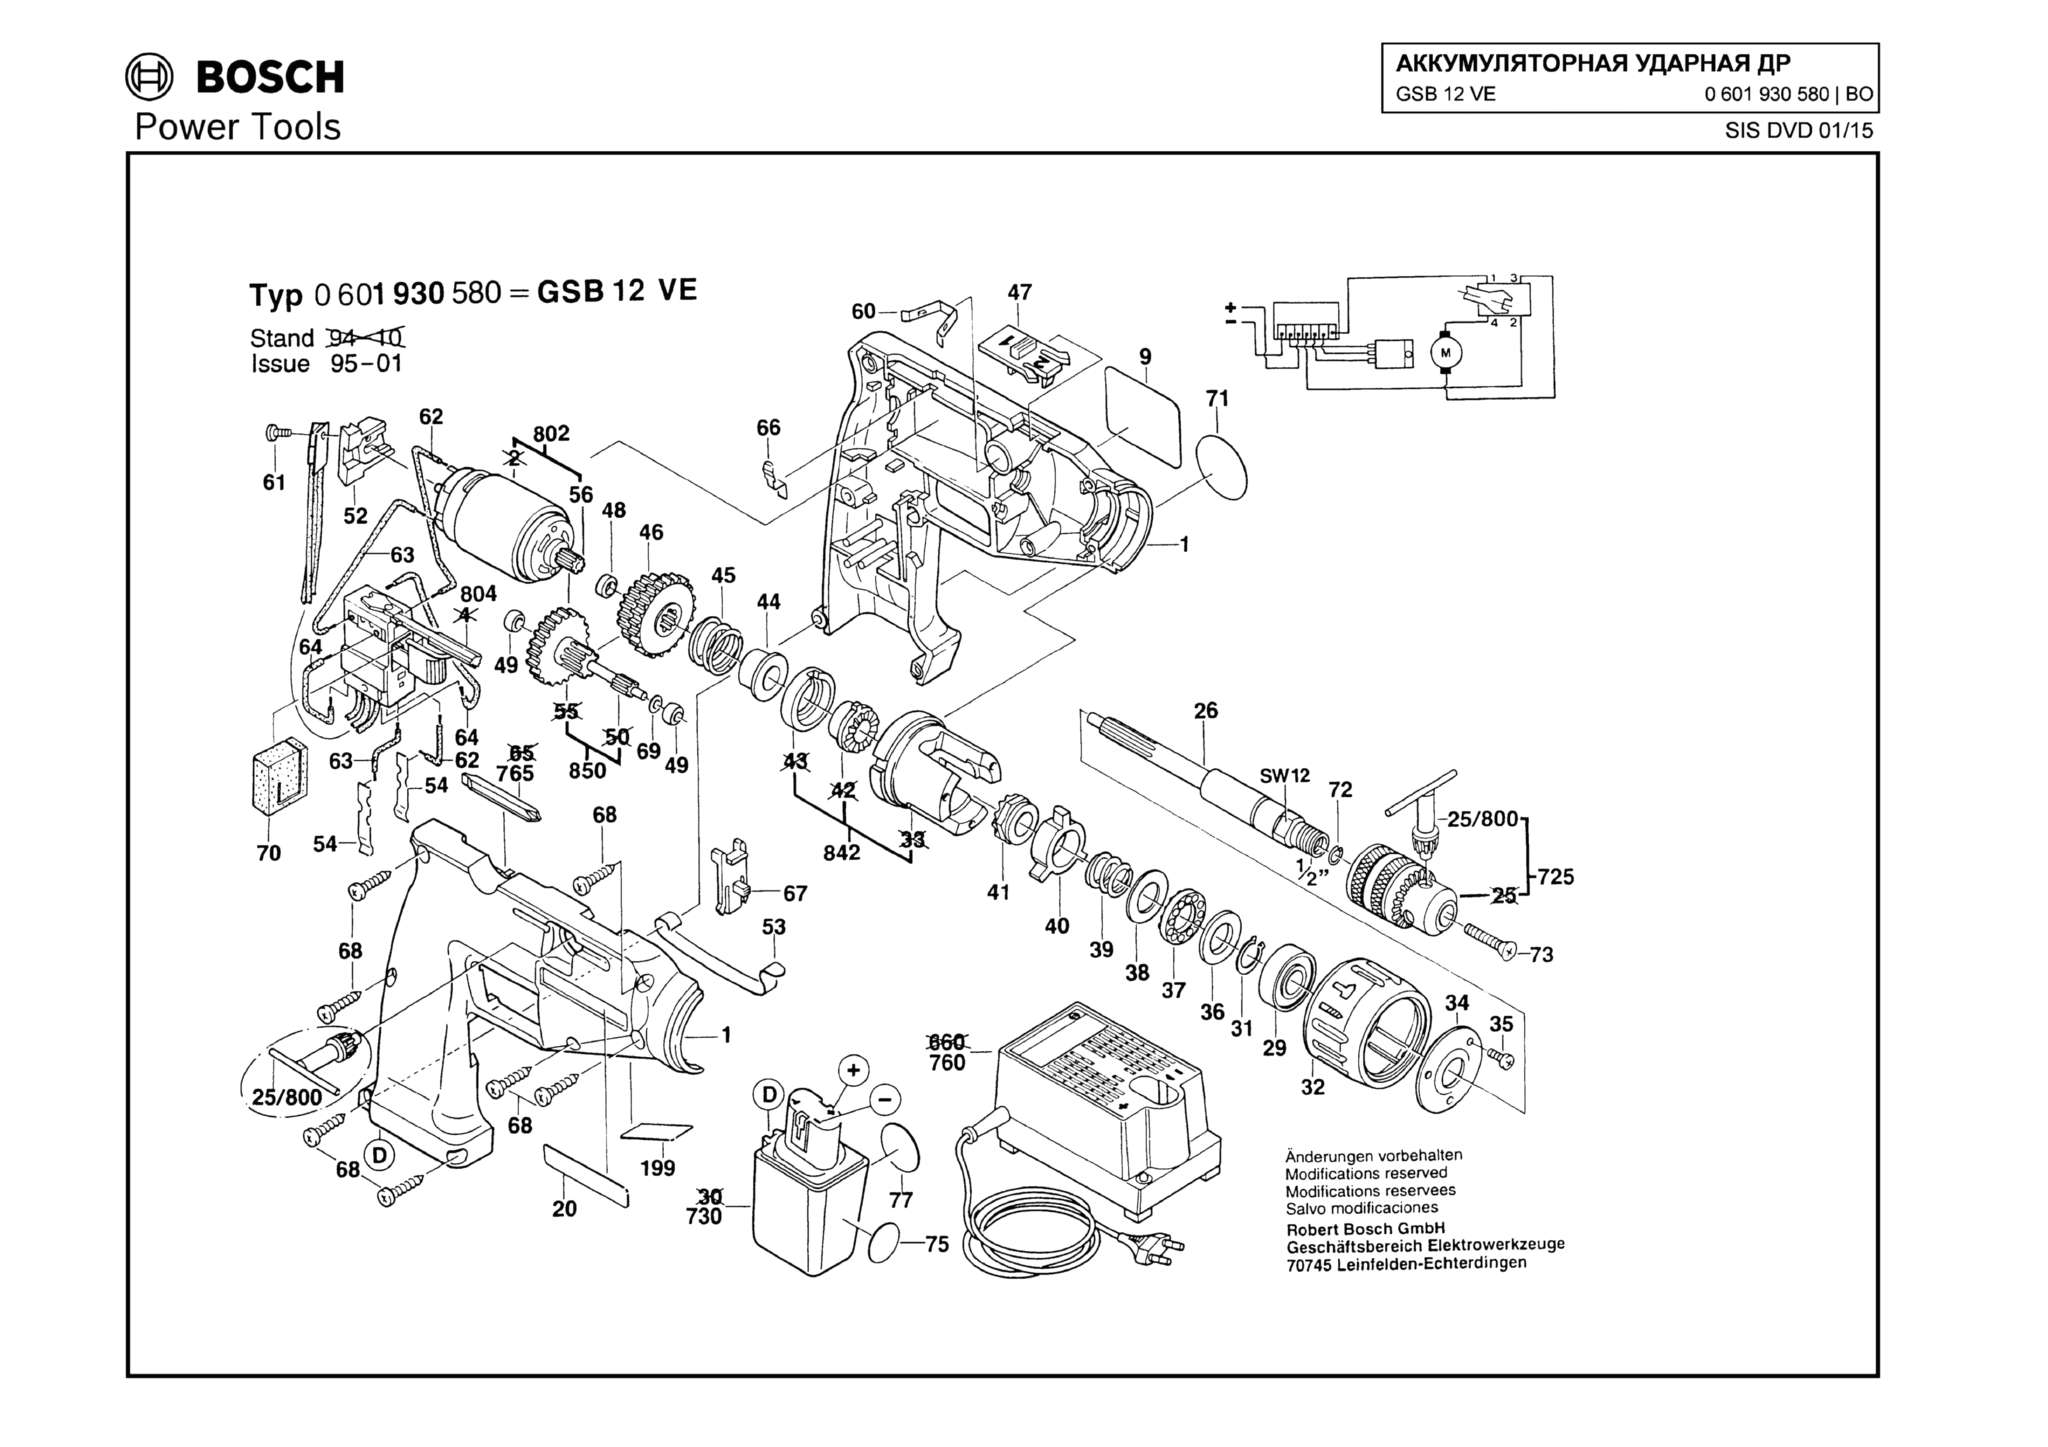 Запчасти, схема и деталировка Bosch GSB 12 VE (ТИП 0601930580)